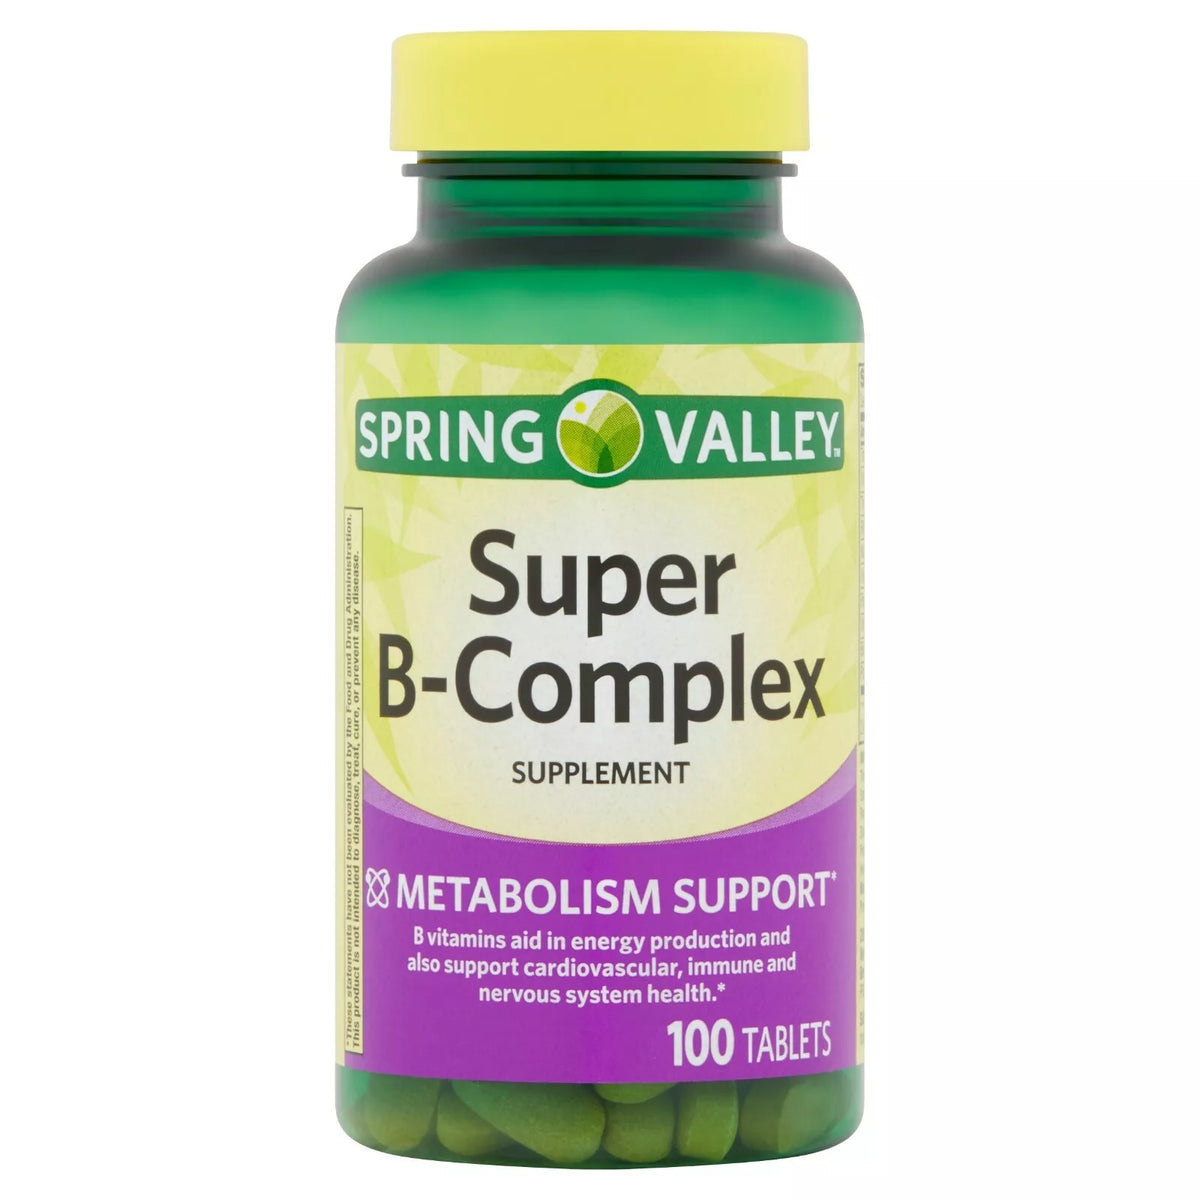 Spring Valley Super B-Complex Metabolism Support B Vitamins Tablets, 100 CT..